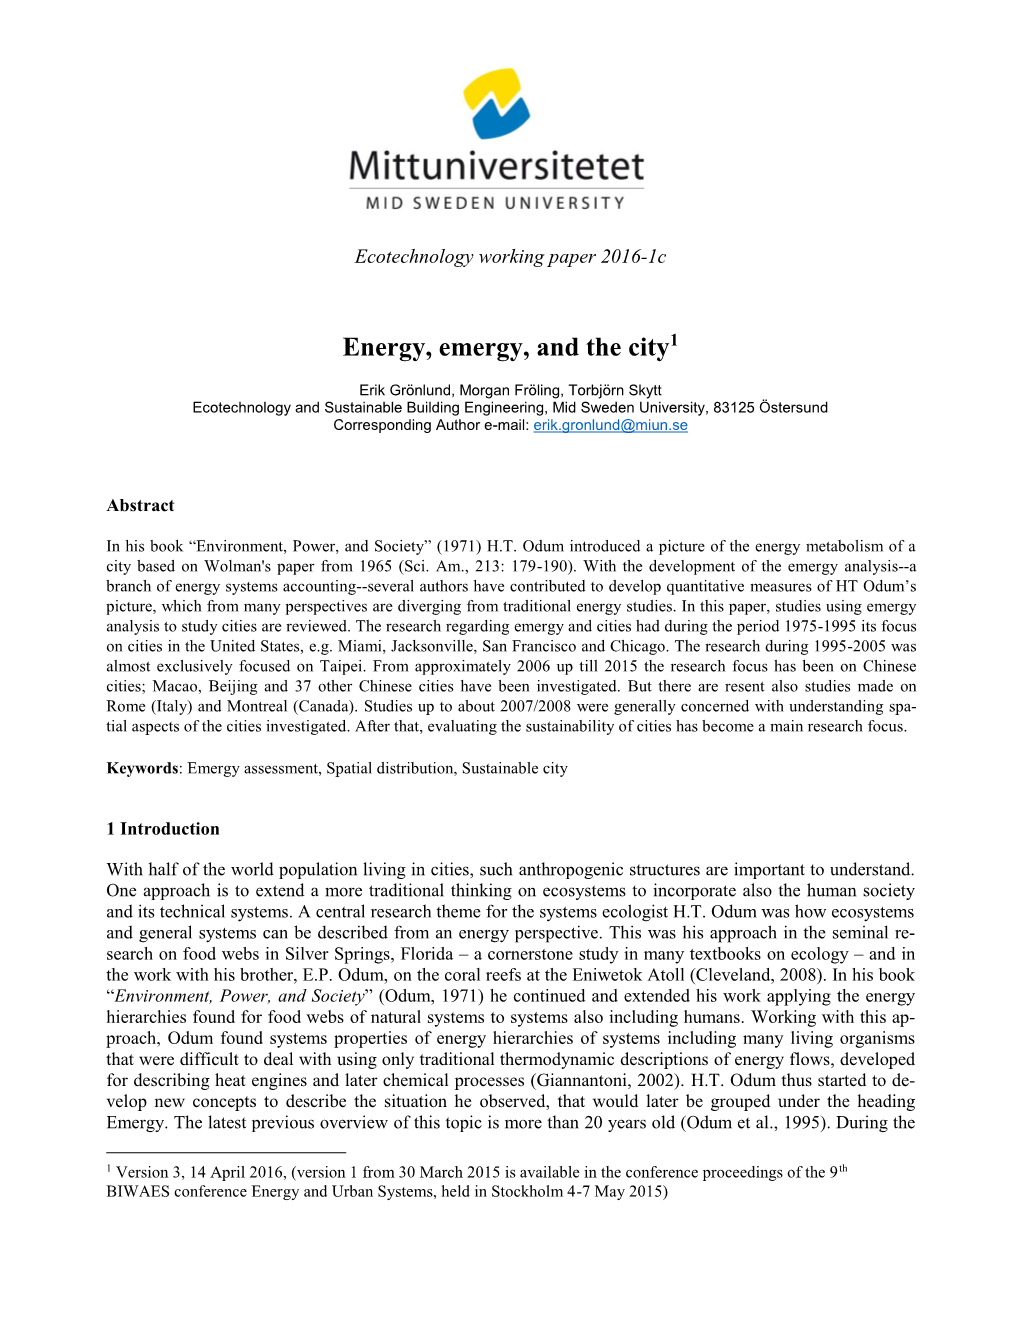 Energy, Emergy, and the City1